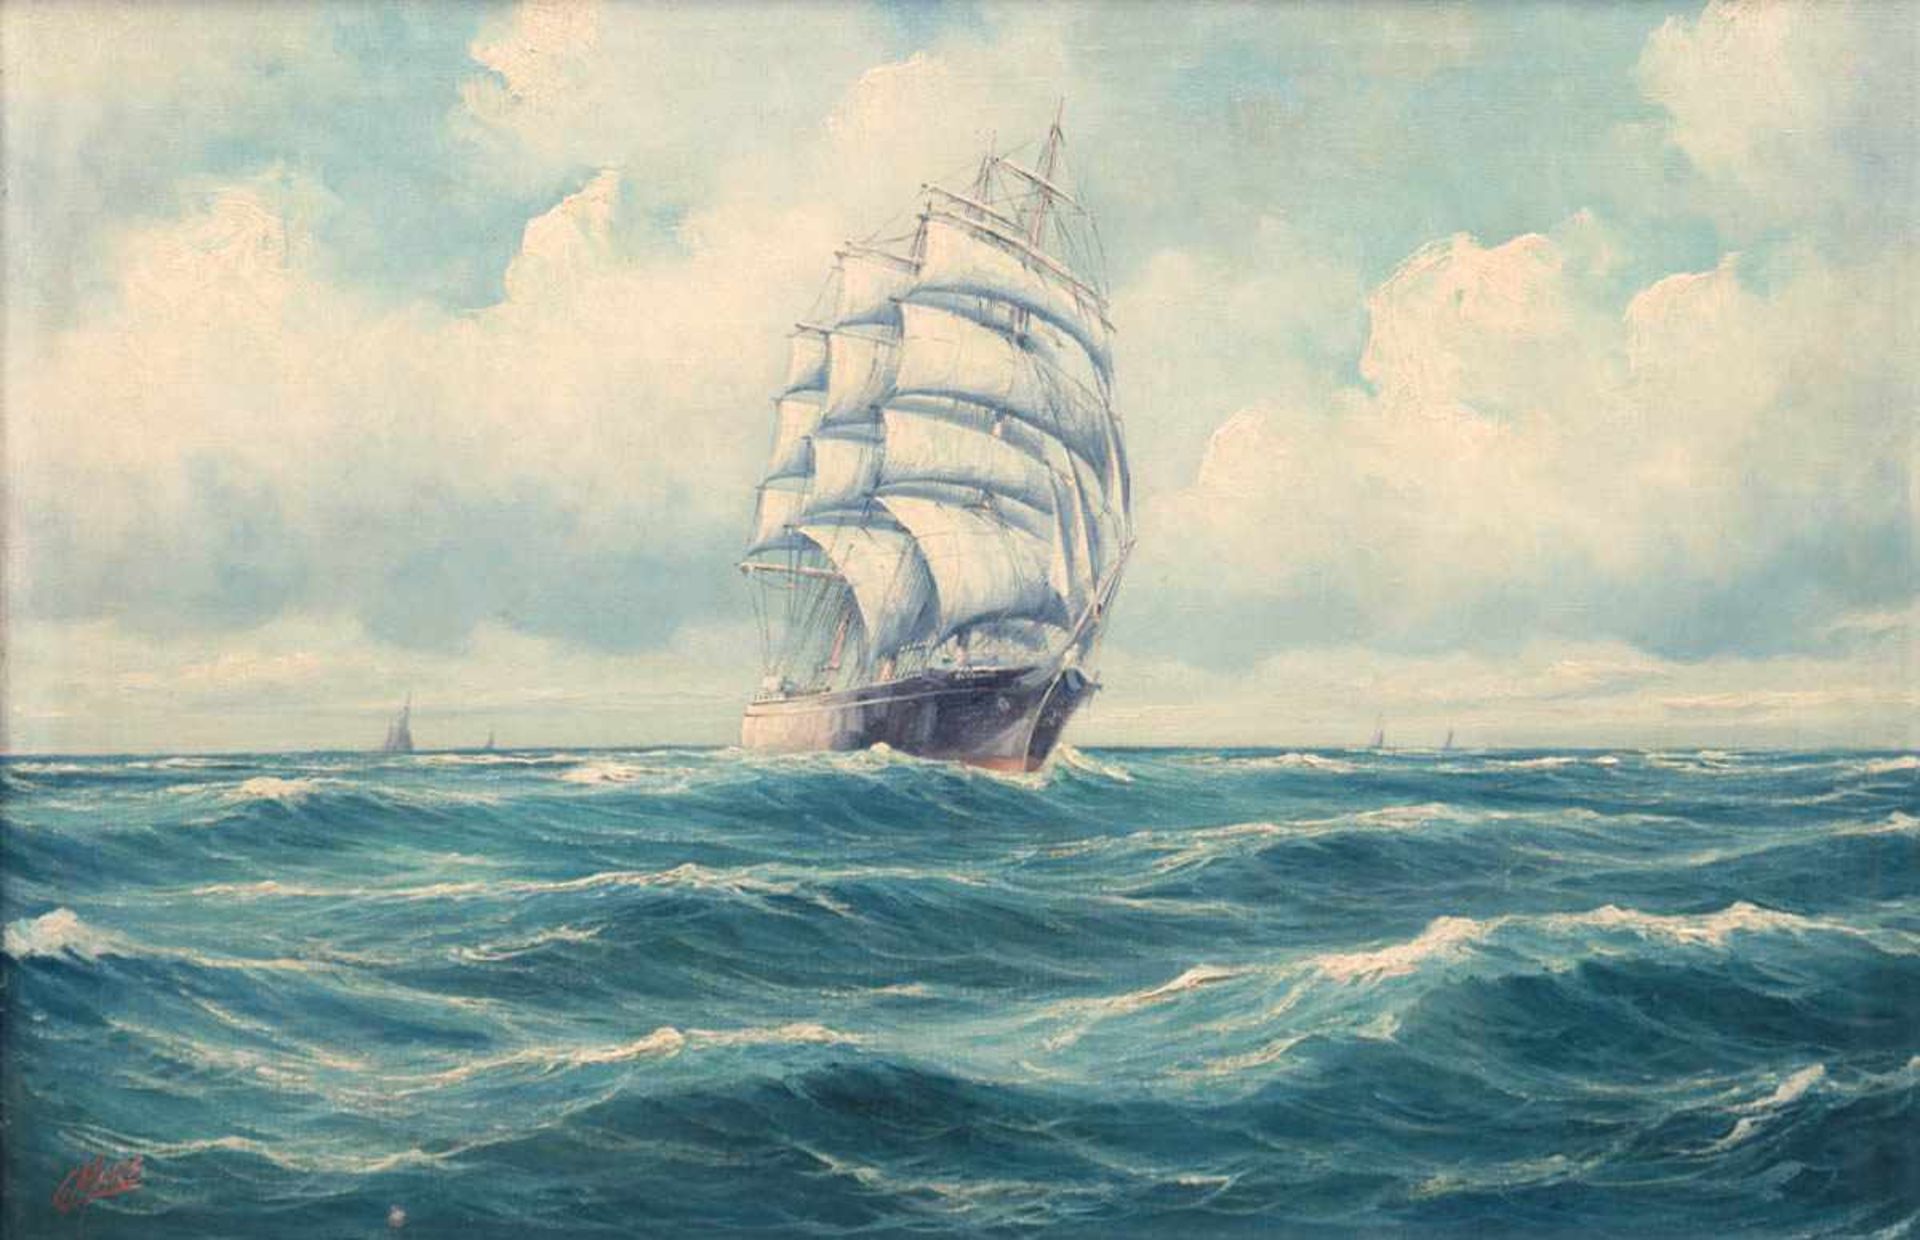 Mare, C. (20. Jh.) "Segelschiff auf See", Öl/Lw., sign. u.l., rücks. bez., 54x81 cm,Rahmen- - -23.80